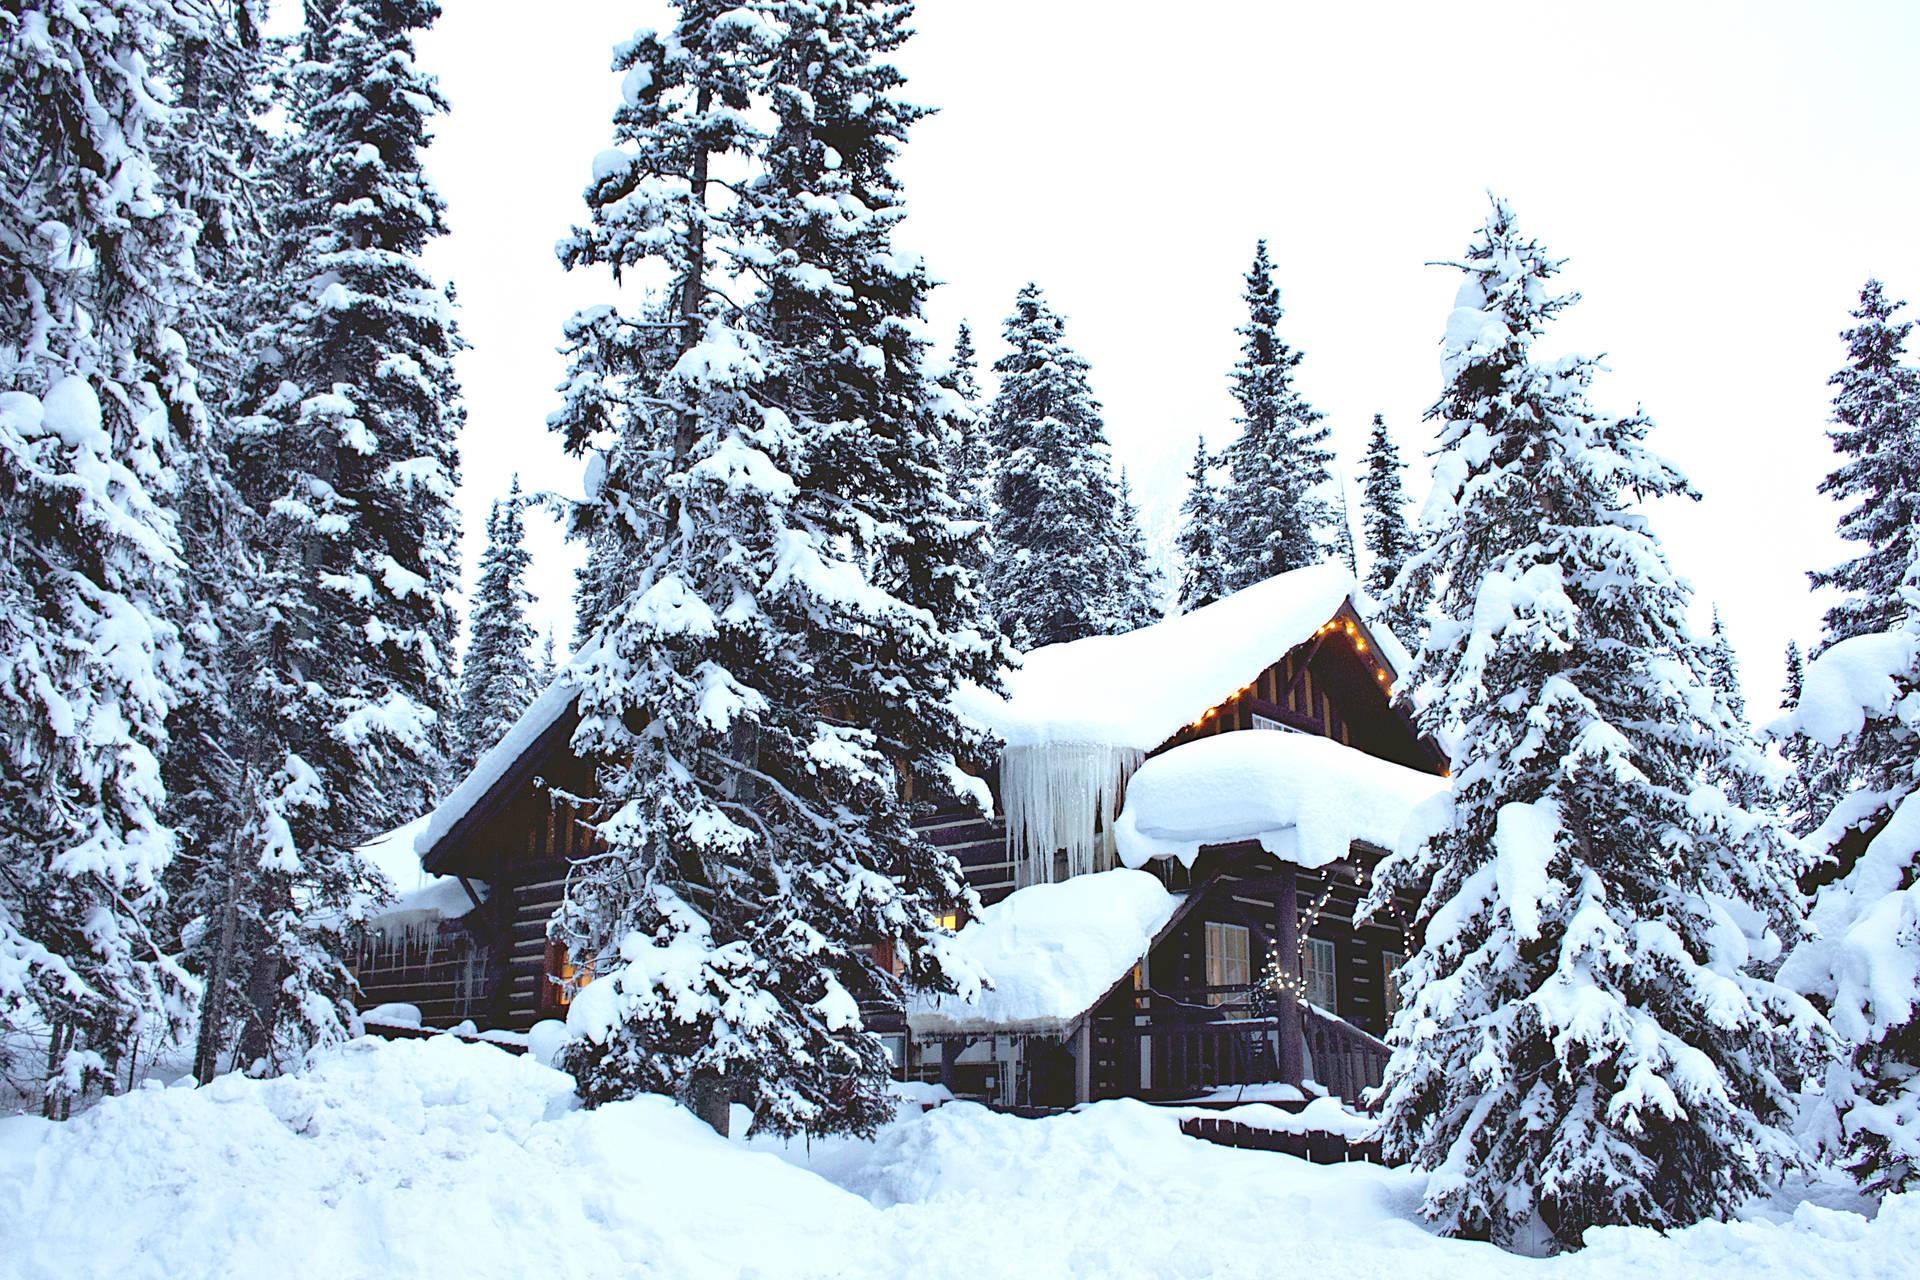 A winter wonderland of snowglobe-like houses Wallpaper